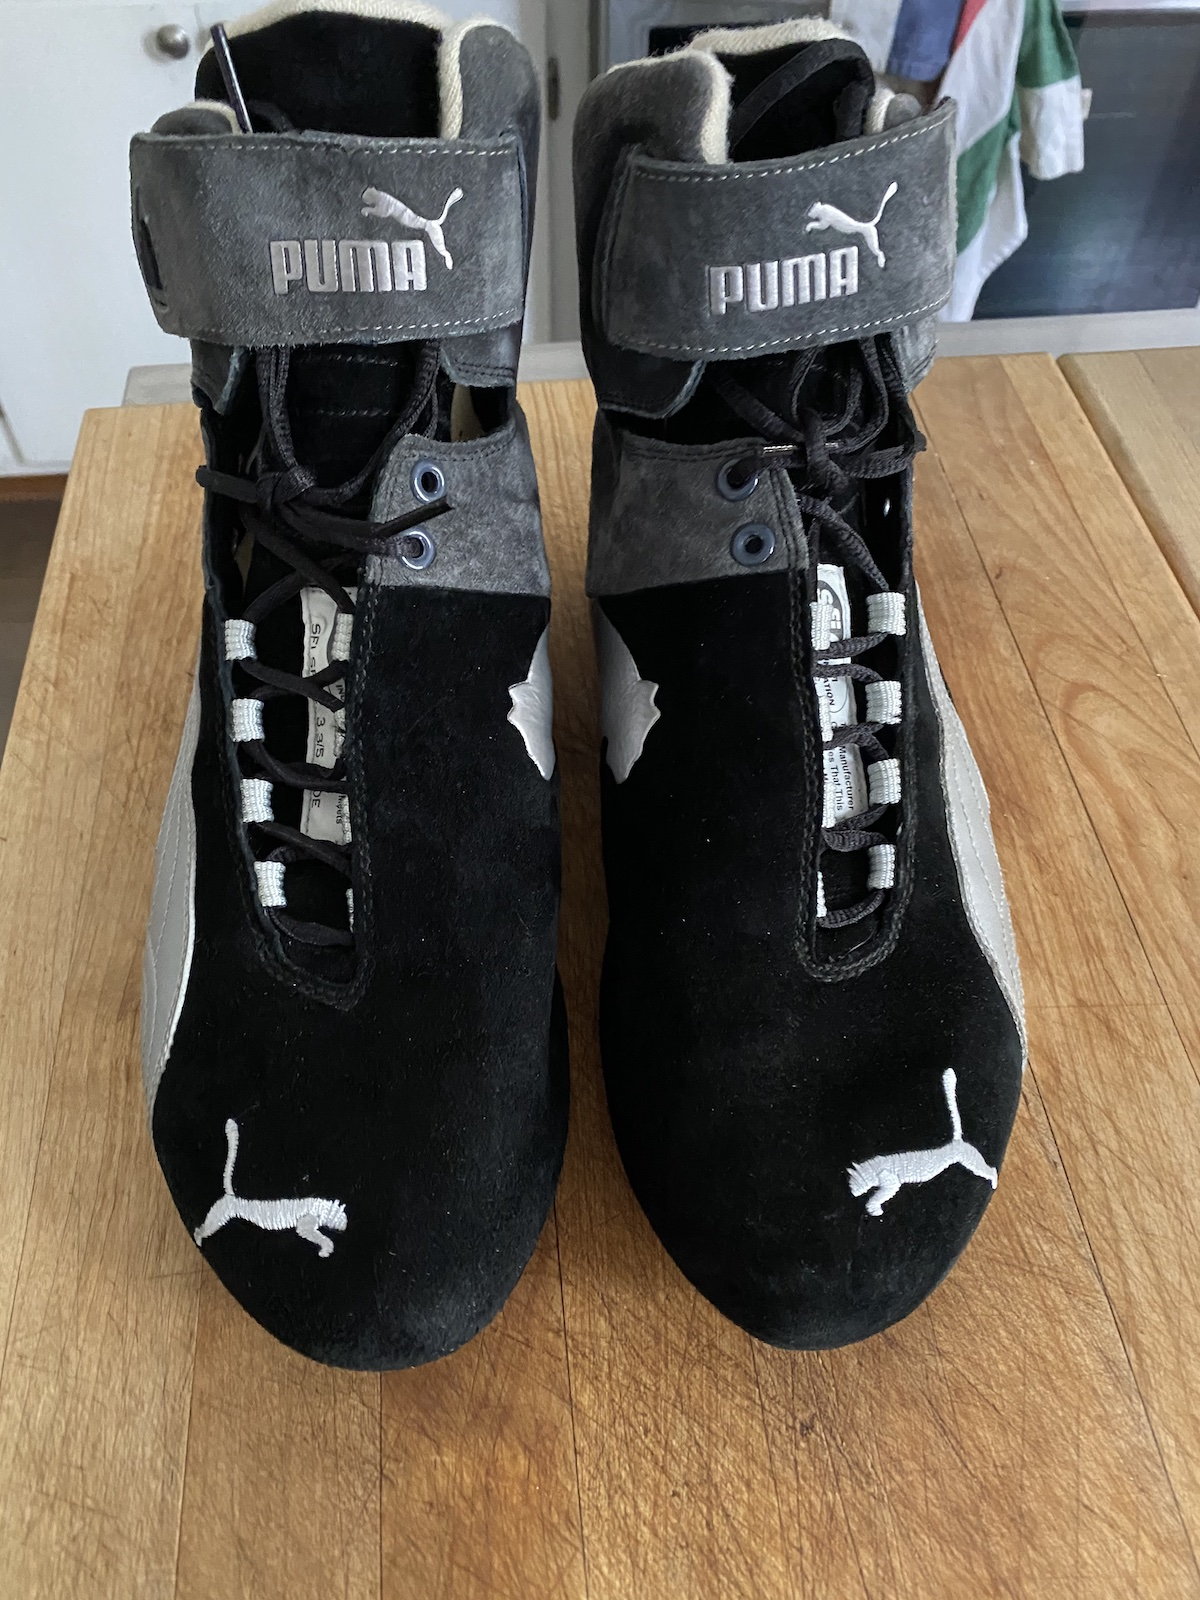 puma high top racing shoes